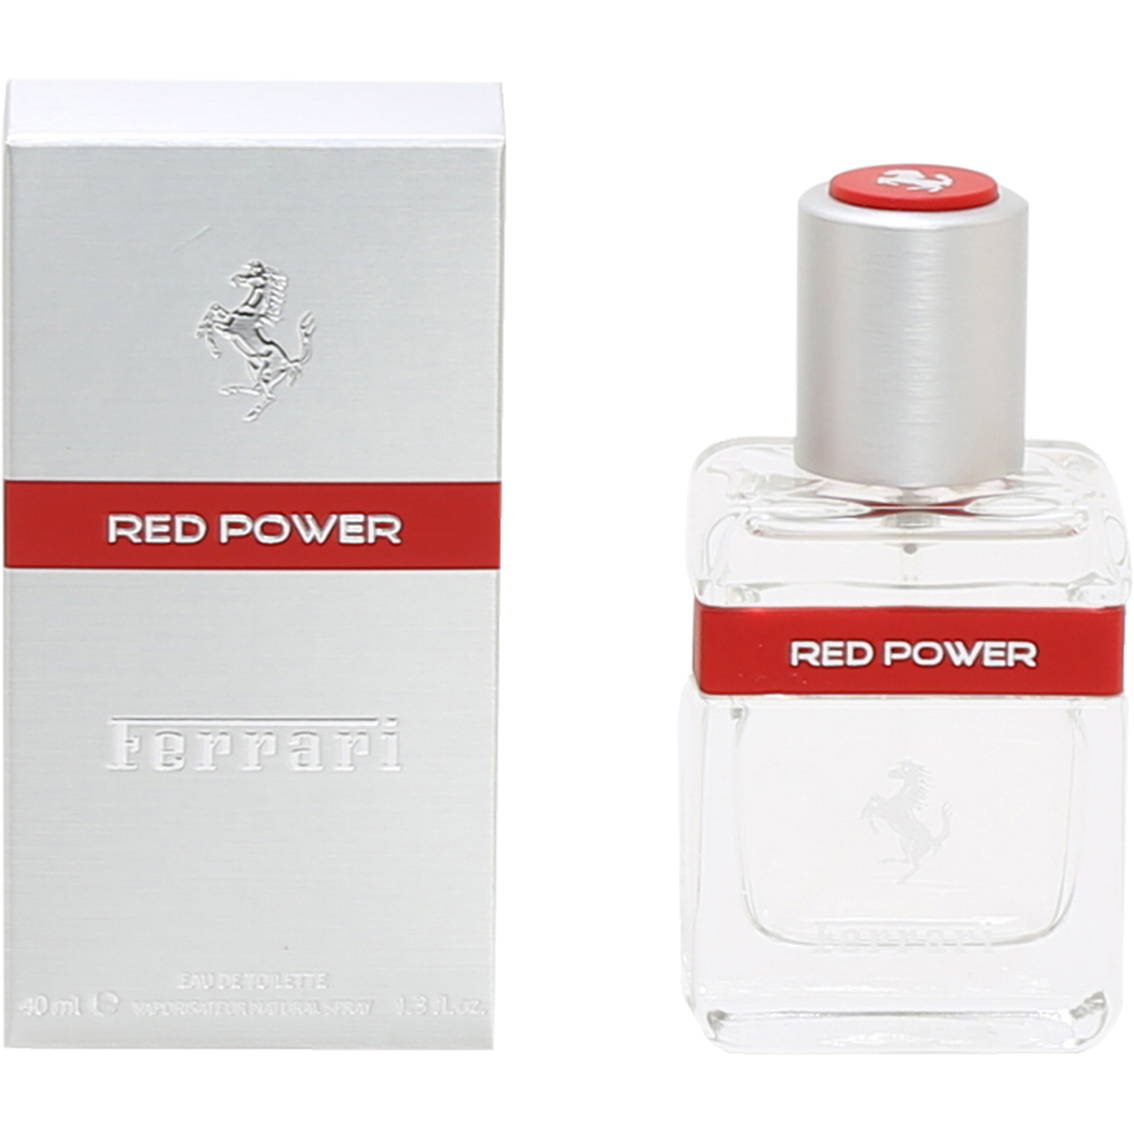 Ferrari Red Power Eau de Toilette 1.3 oz. Spray - Image 2 of 2